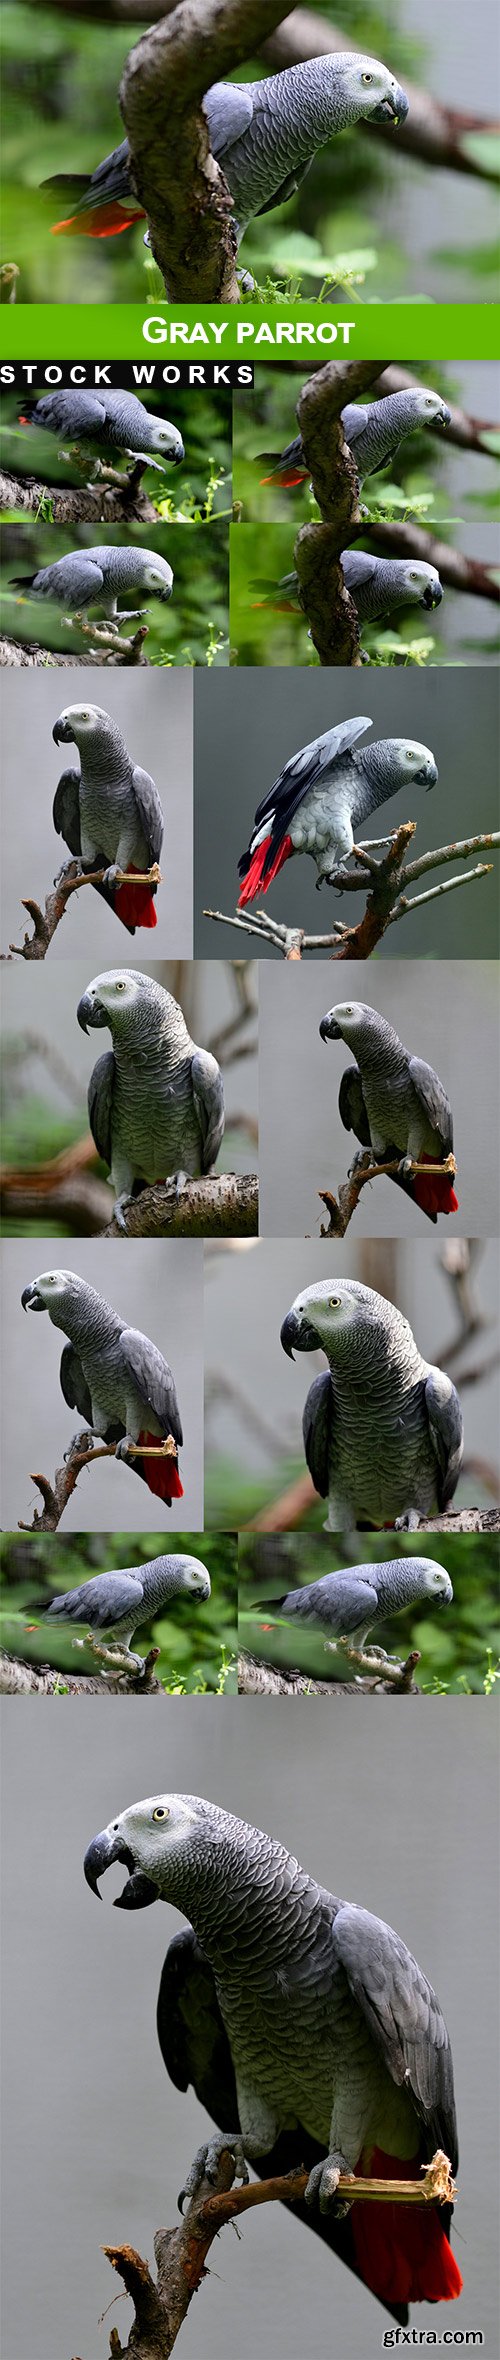 Gray Parrot - 13 UHQ JPEG